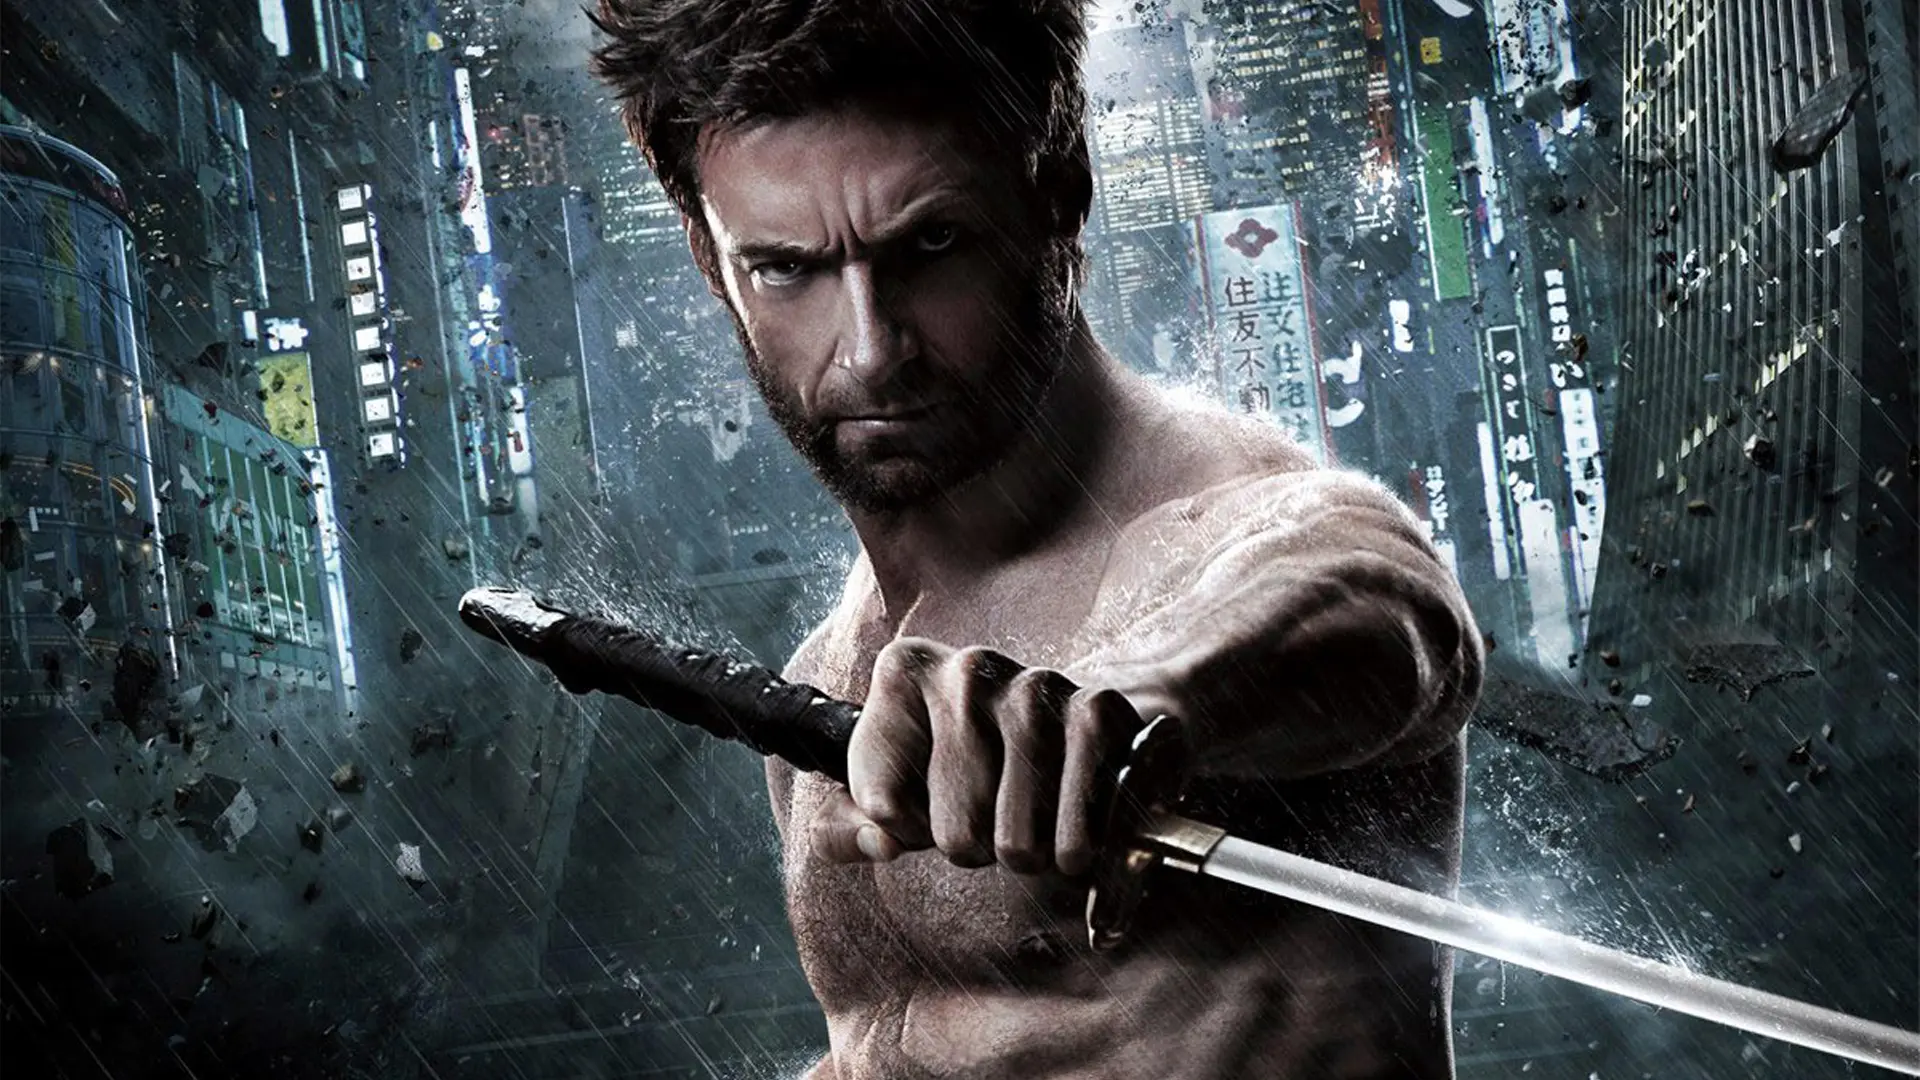 Wallpaper hd: The Wolverine - download free in 4K, wallpaper Movie